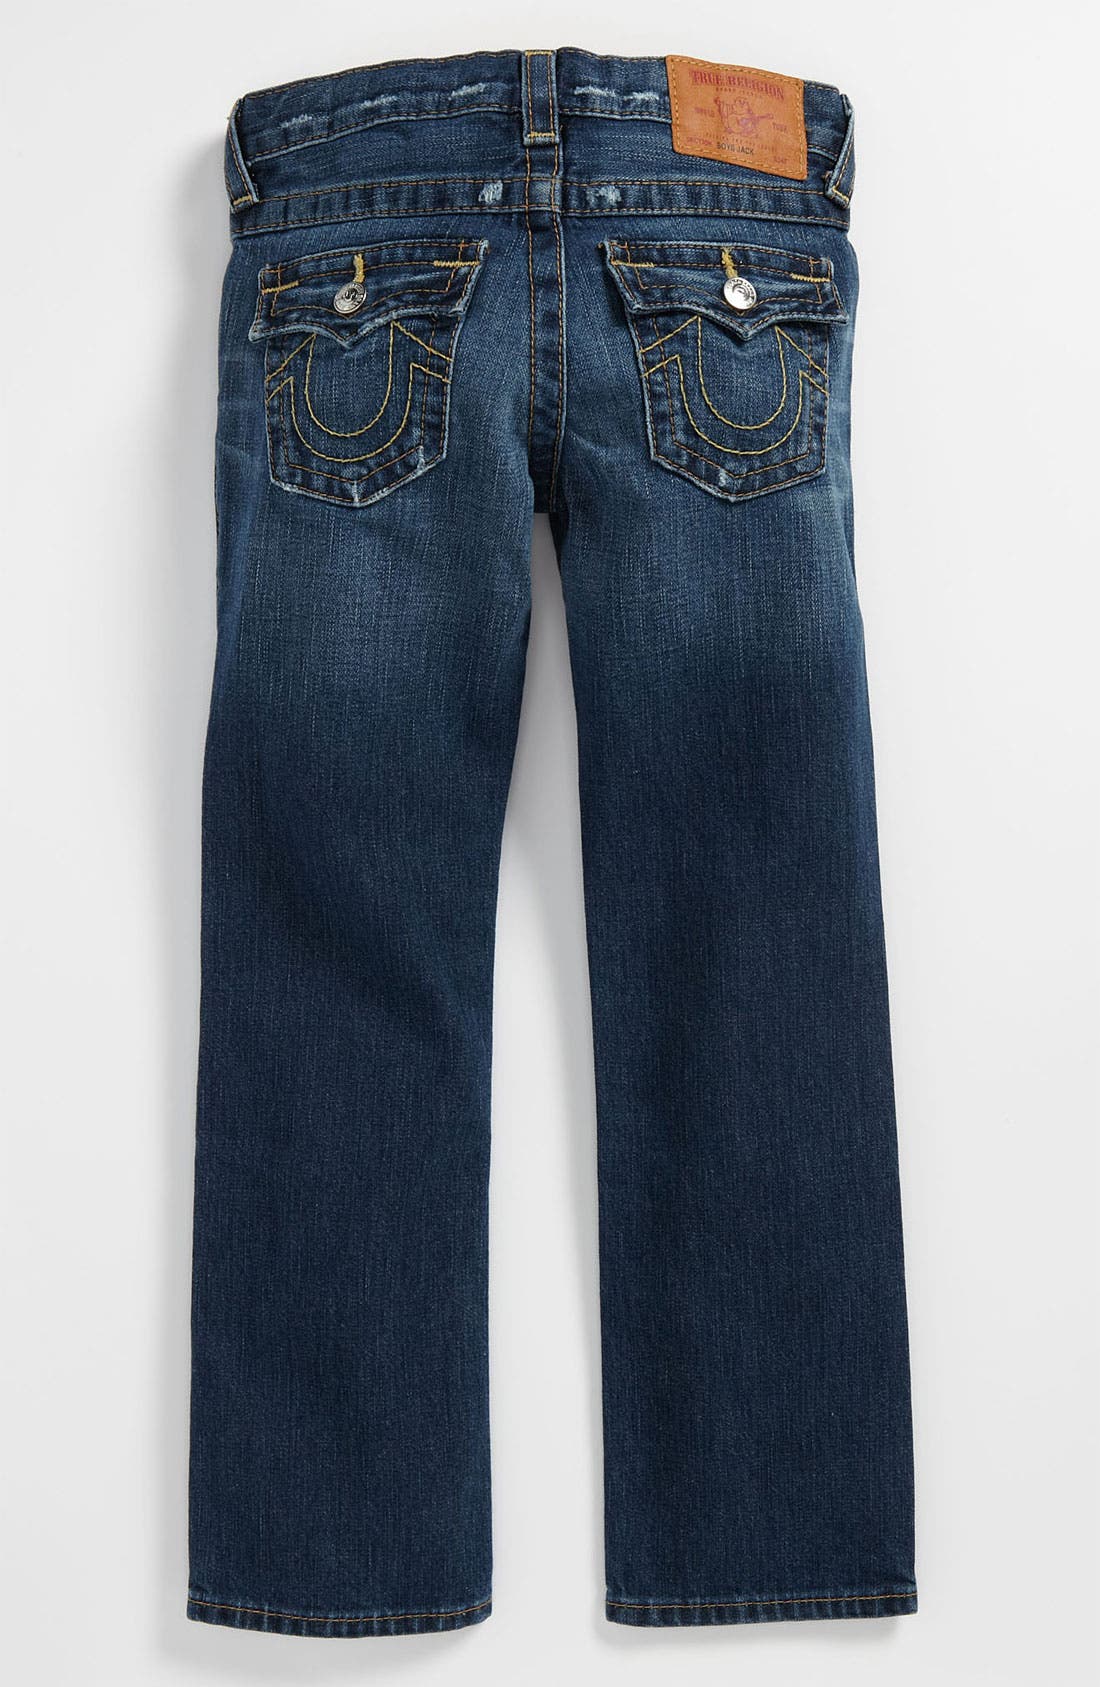 true religion jeans nordstrom